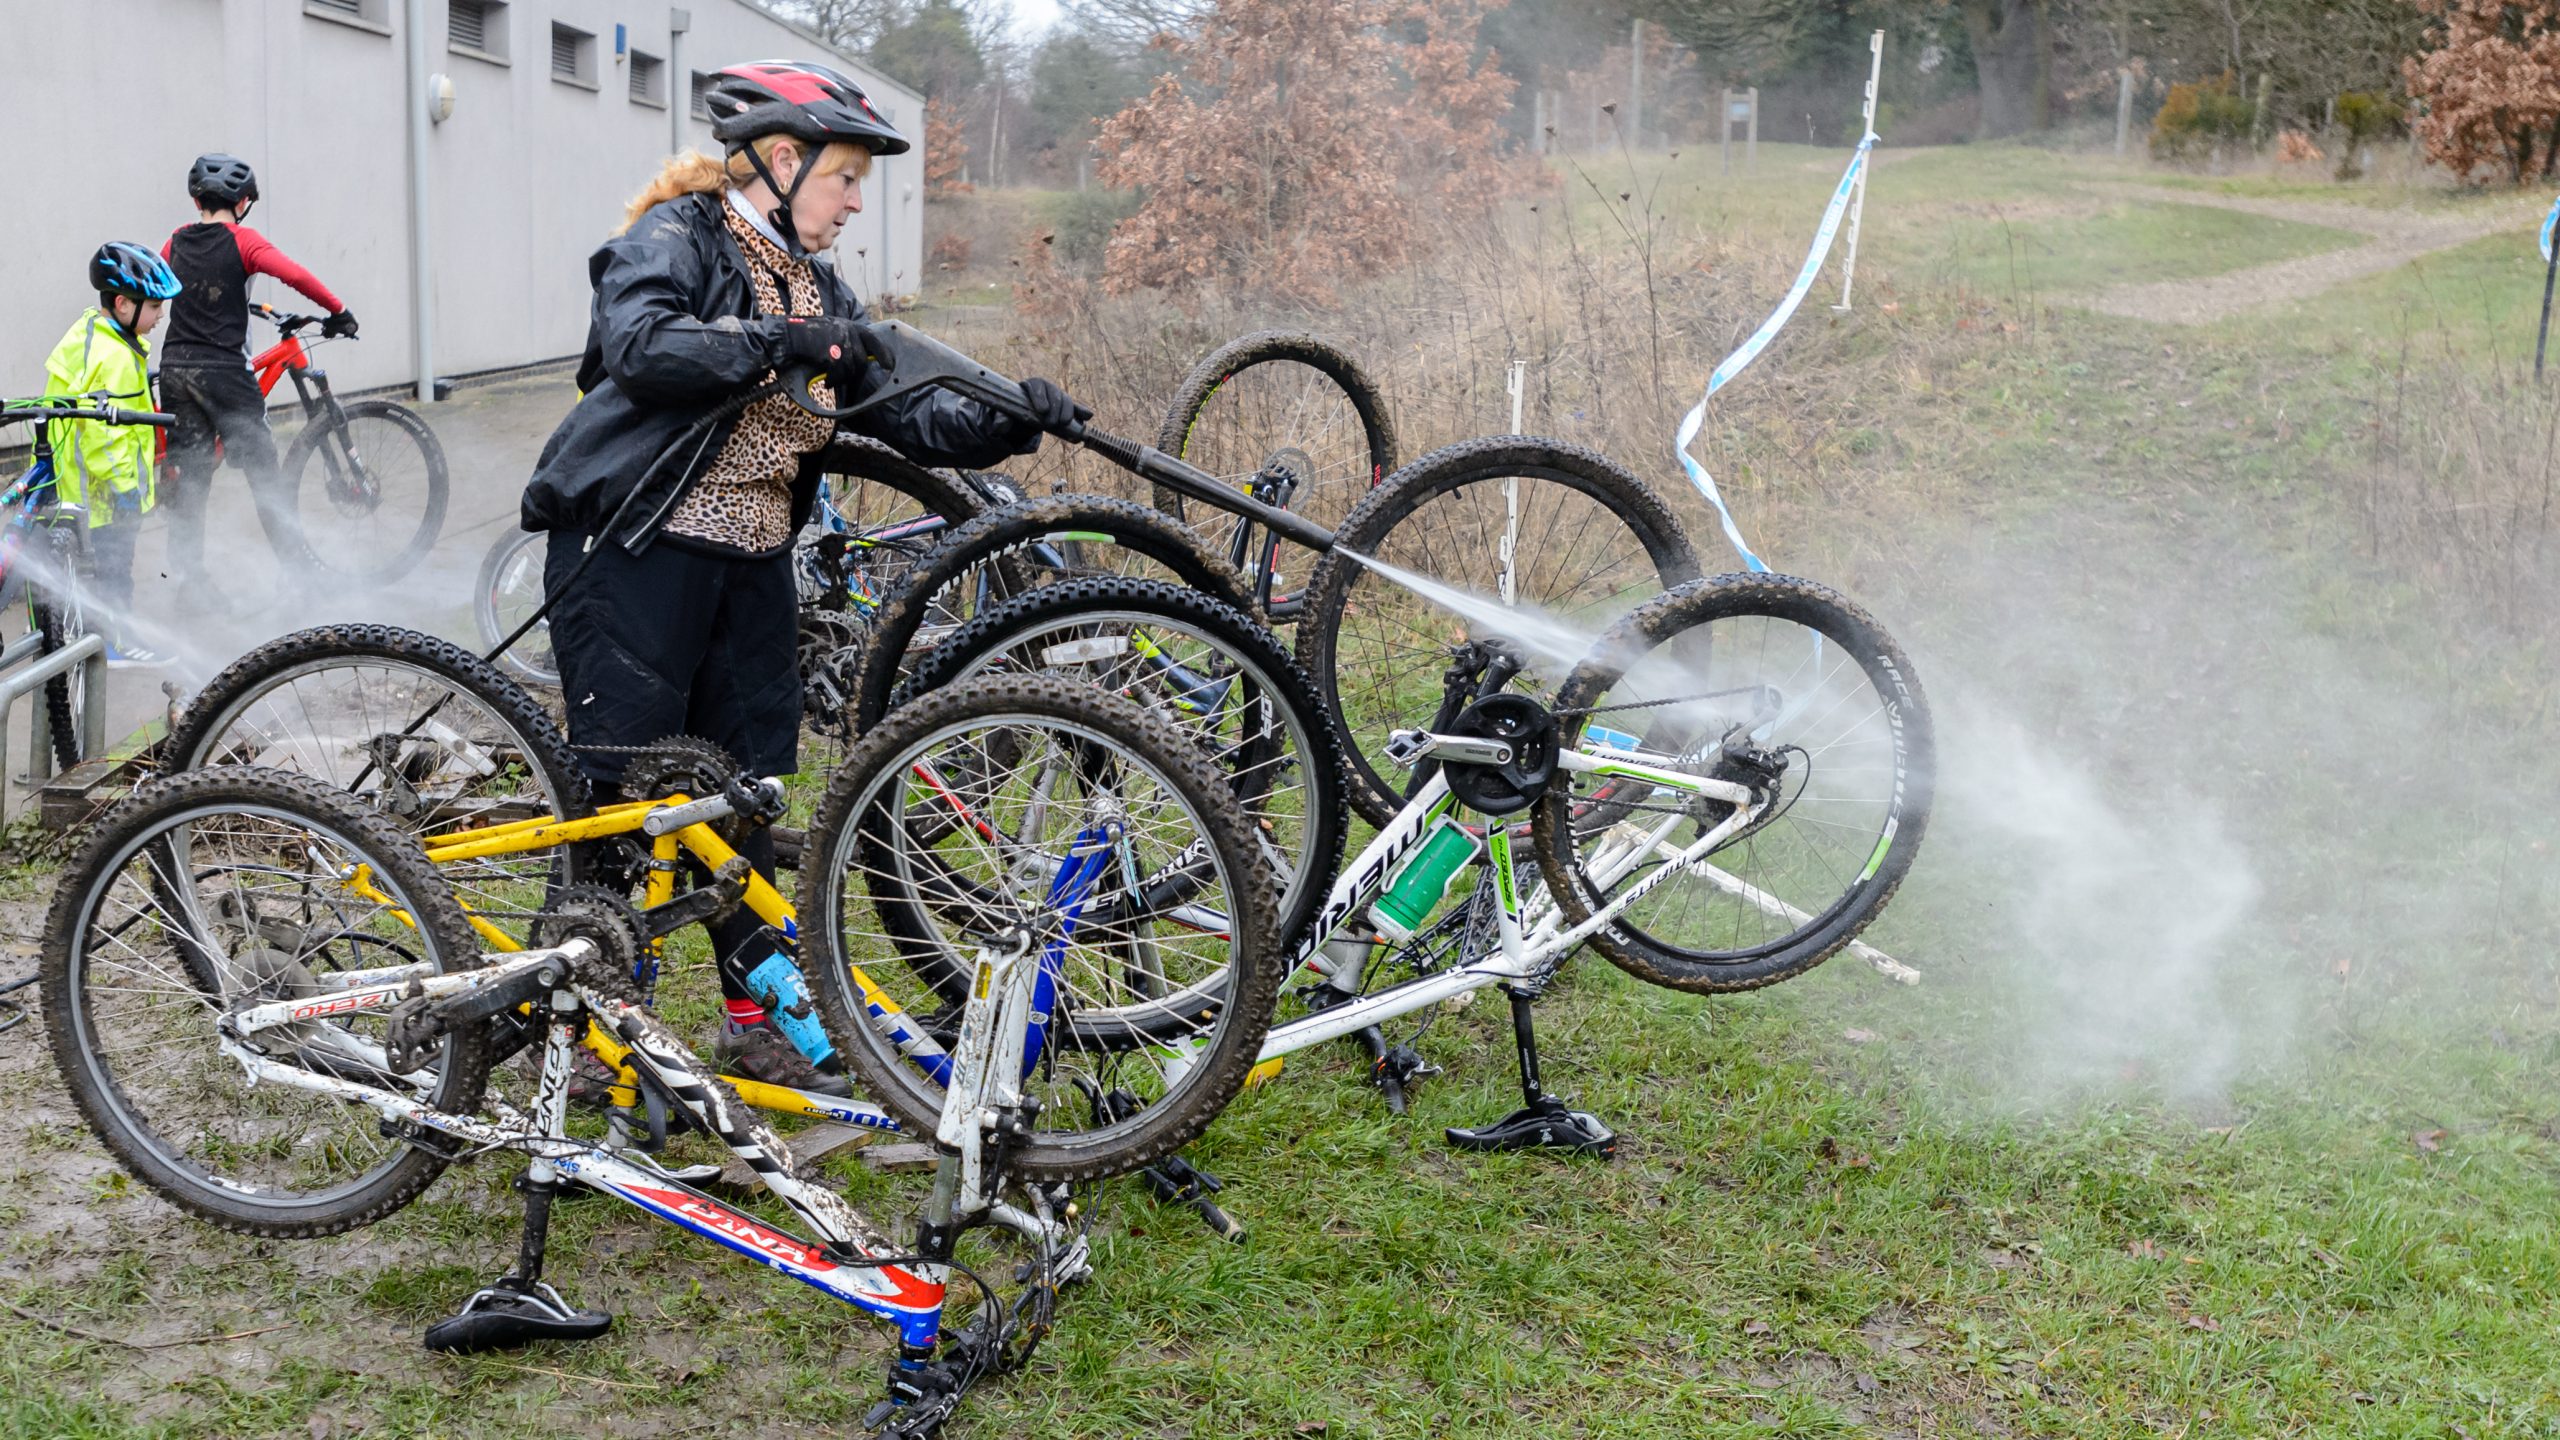 Woman hosing down mountain bikes to clean them